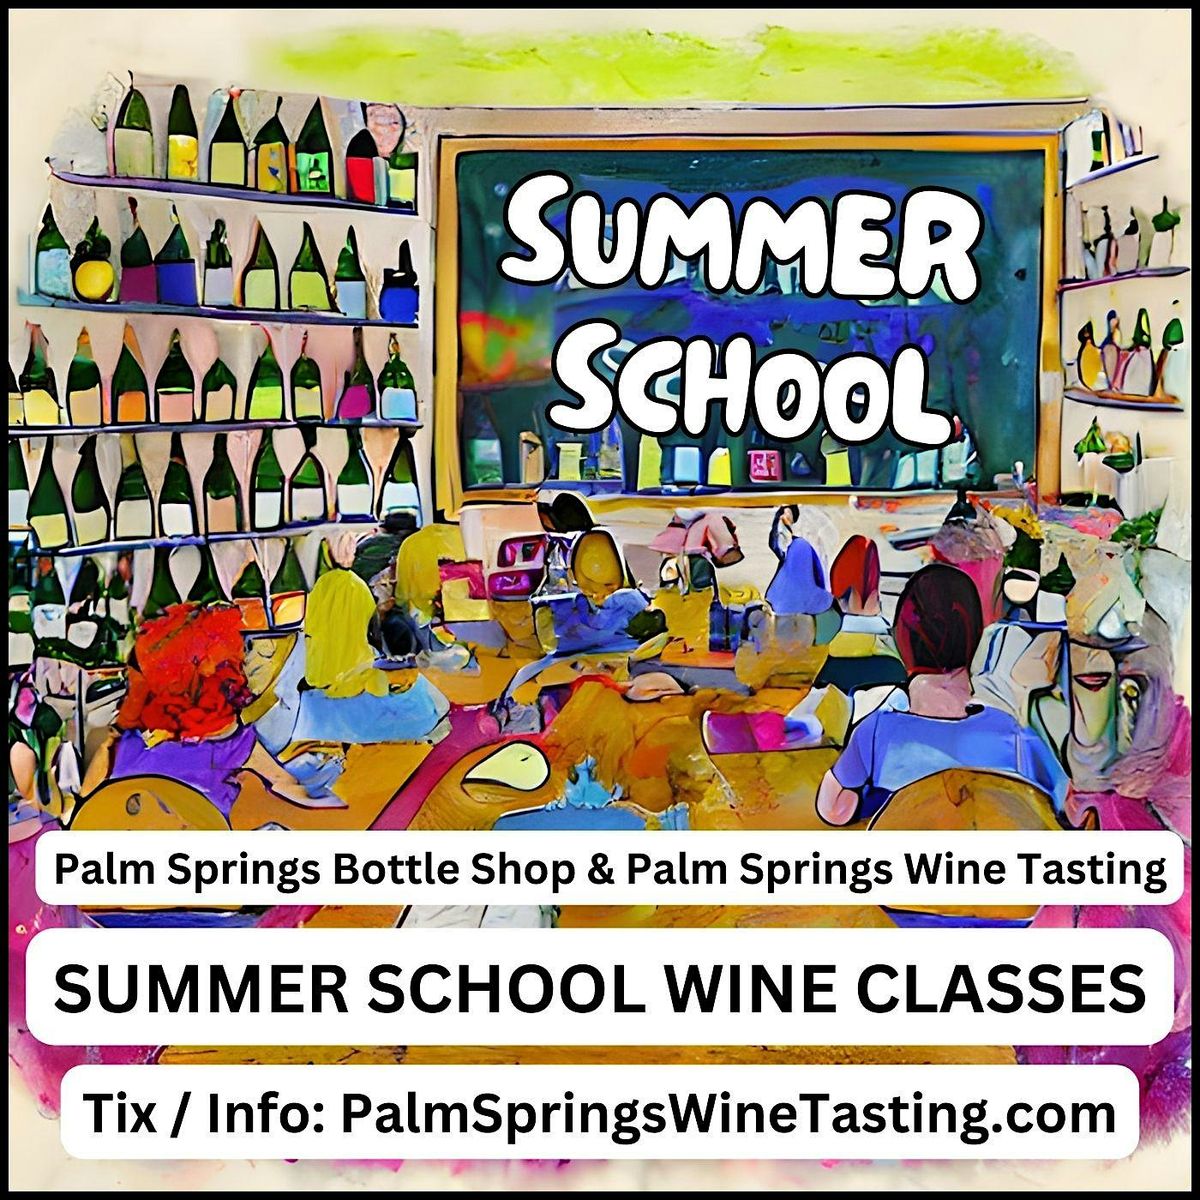 Summer School Wine Tasting Classes